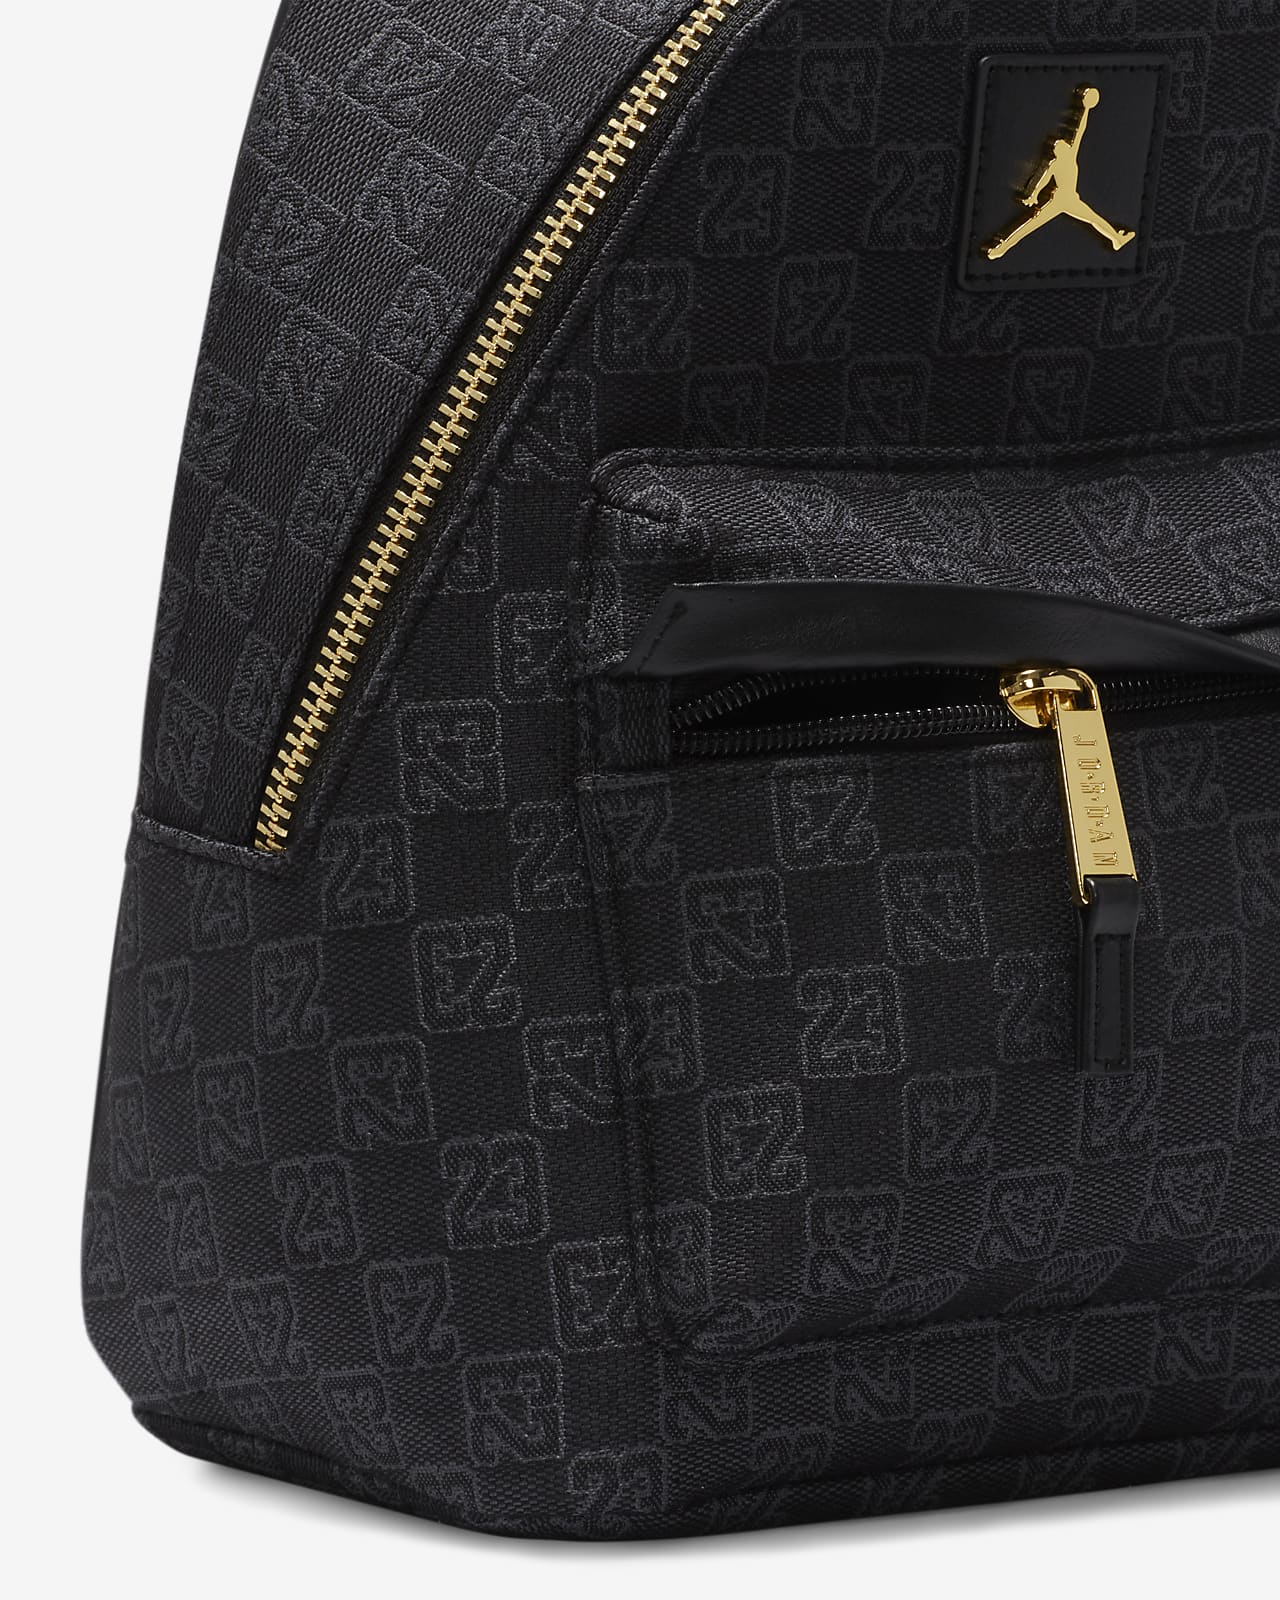 Jordan Monogram Mini Backpack Backpack. Nike LU